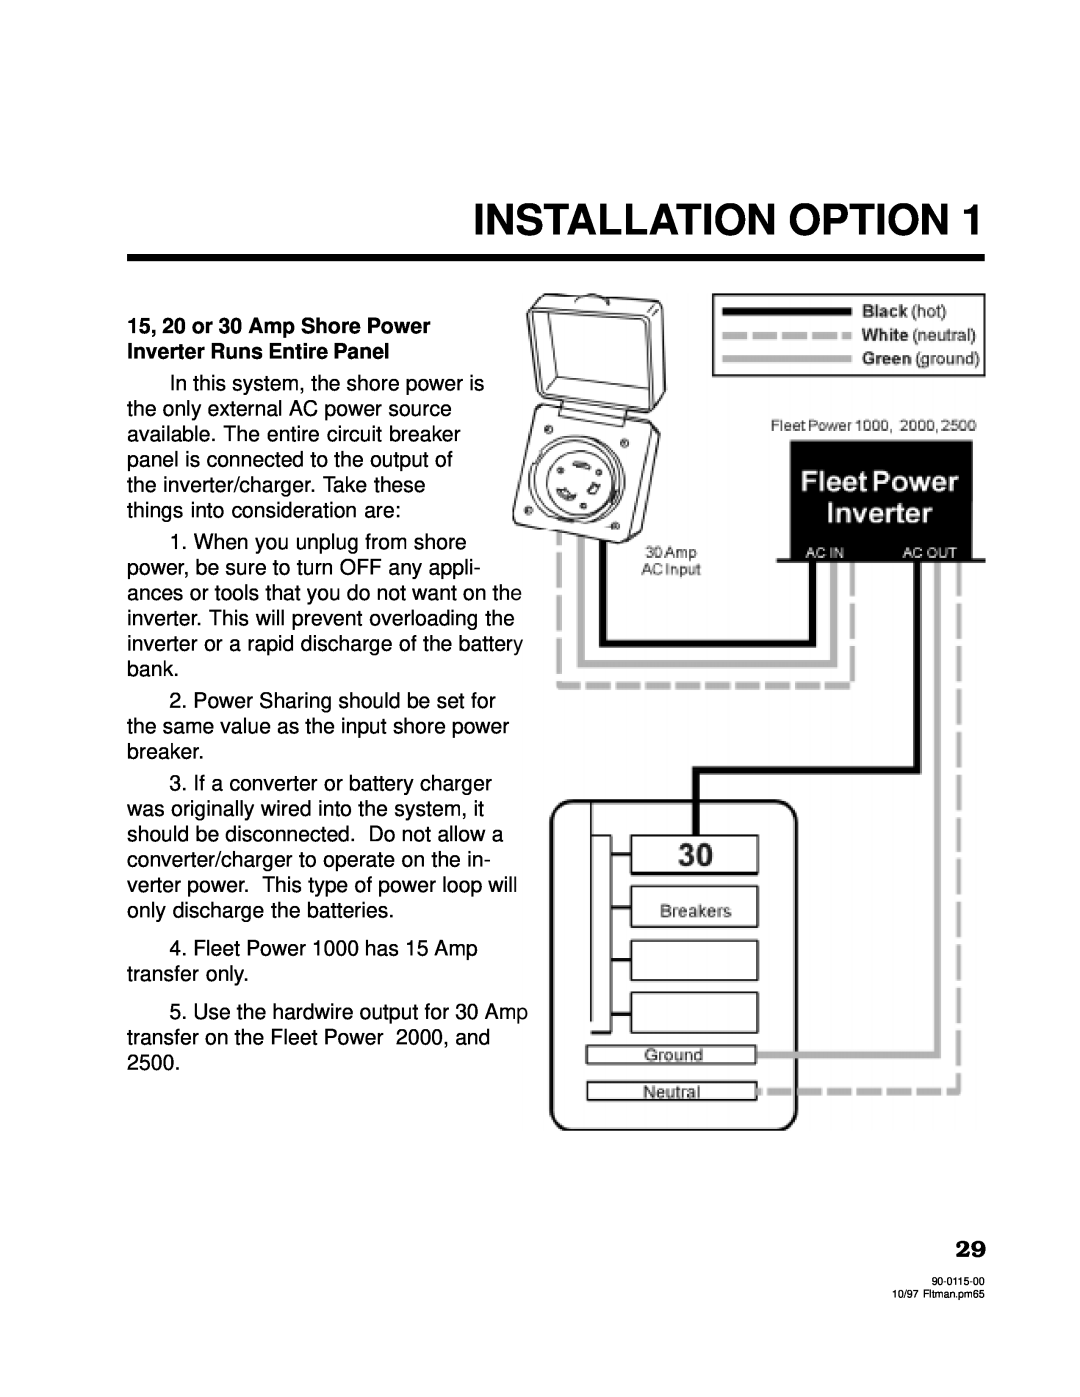 Xantrex Technology 2000, 2500 owner manual Installation Option 